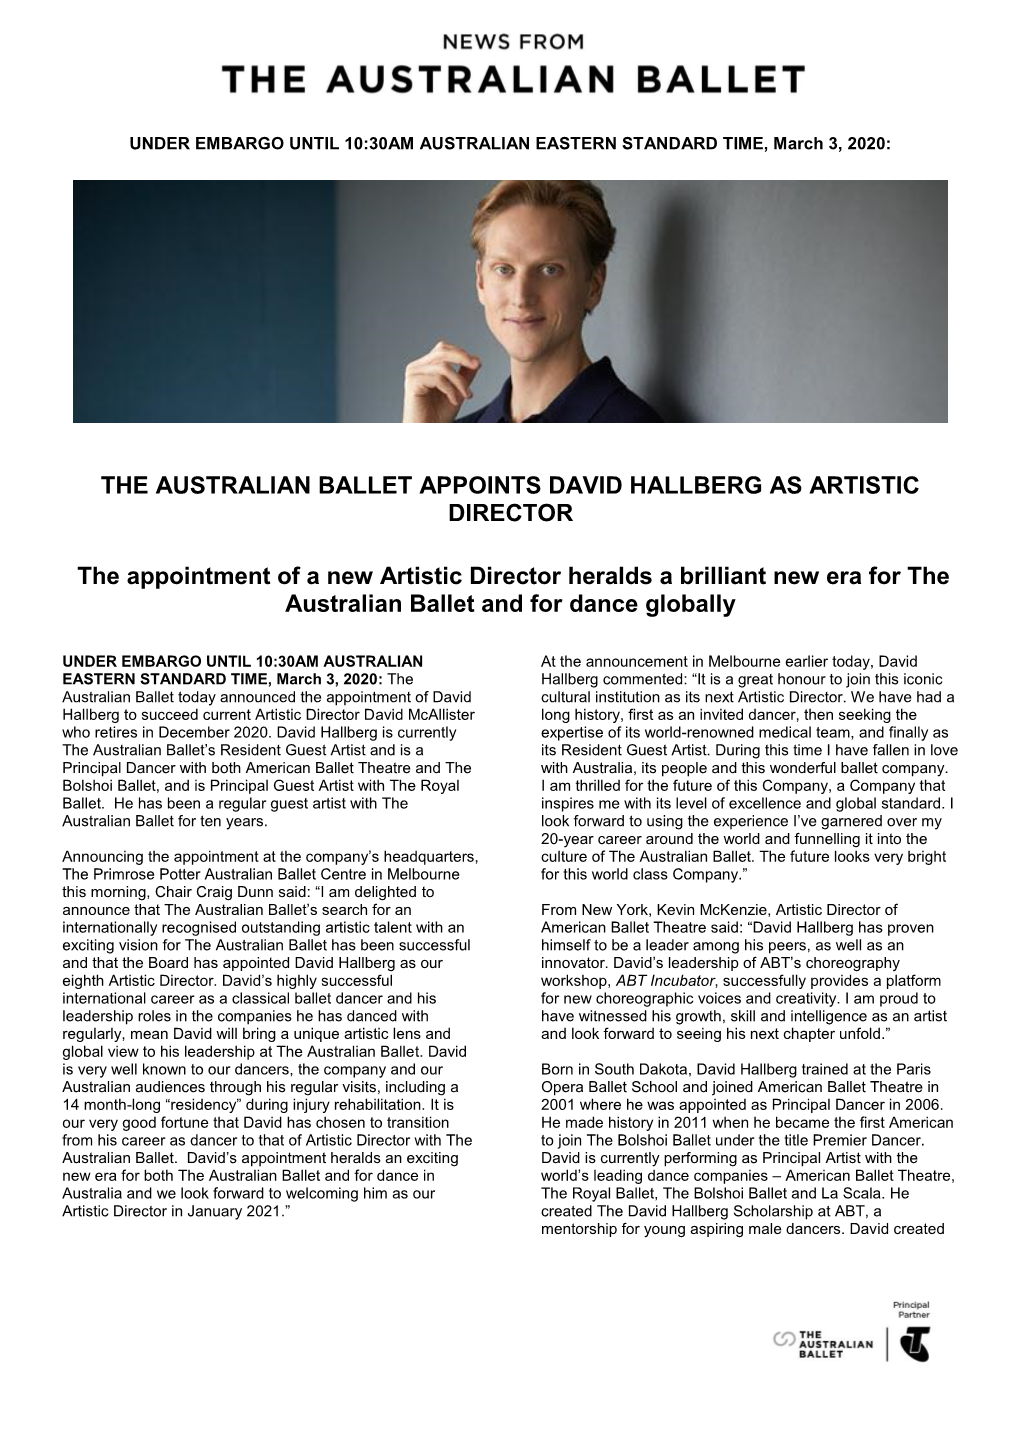 The Australian Ballet Appoints David Hallberg As Artistic Director